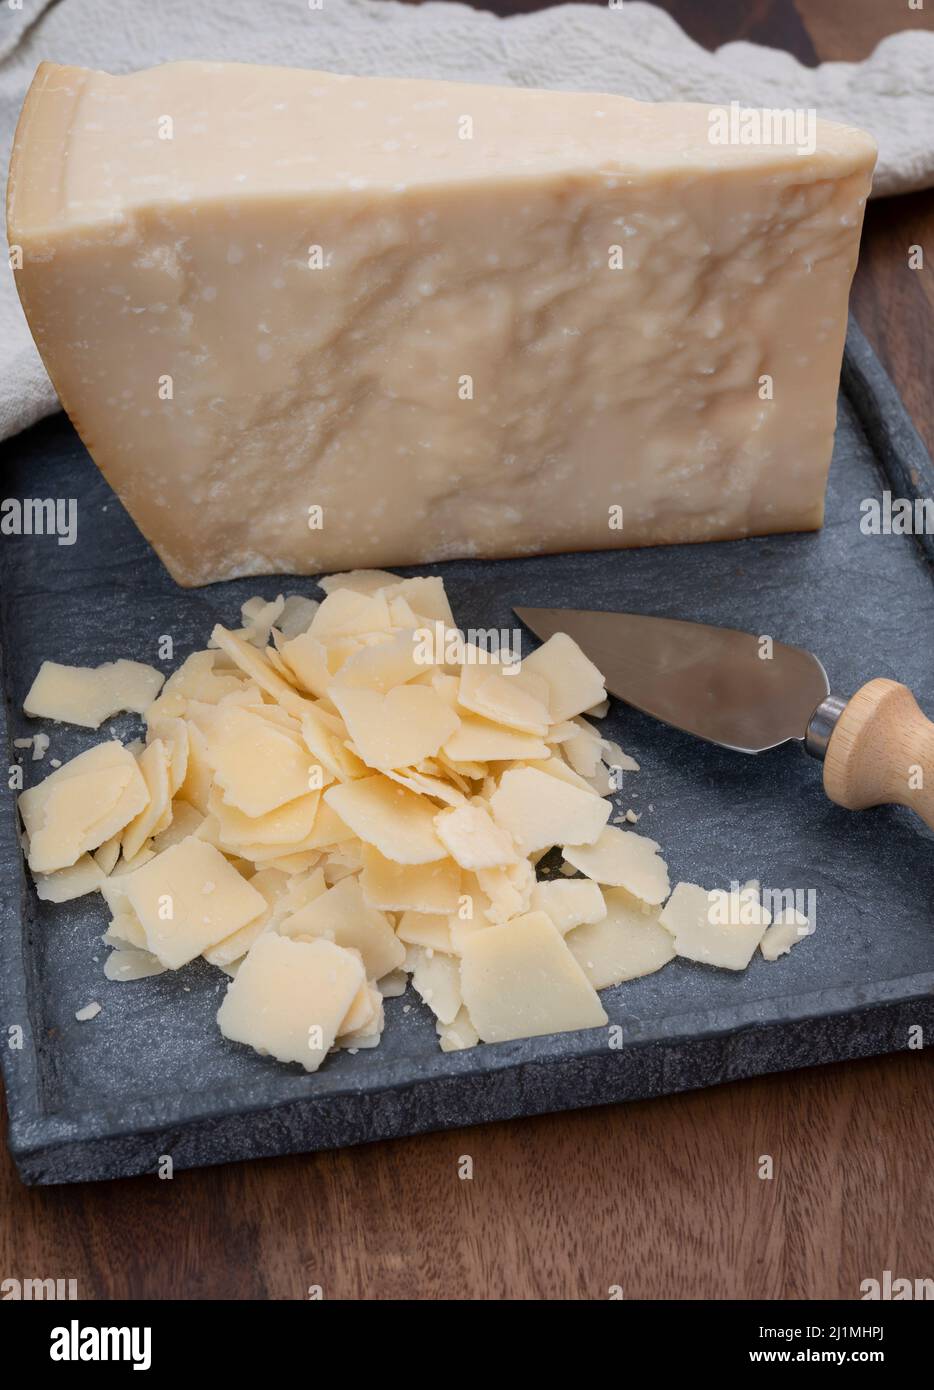 https://c8.alamy.com/comp/2J1MHPJ/flakes-of-parmesan-cheese-italian-hard-parmigiano-reggiano-cheese-from-reggio-emilia-region-close-up-2J1MHPJ.jpg